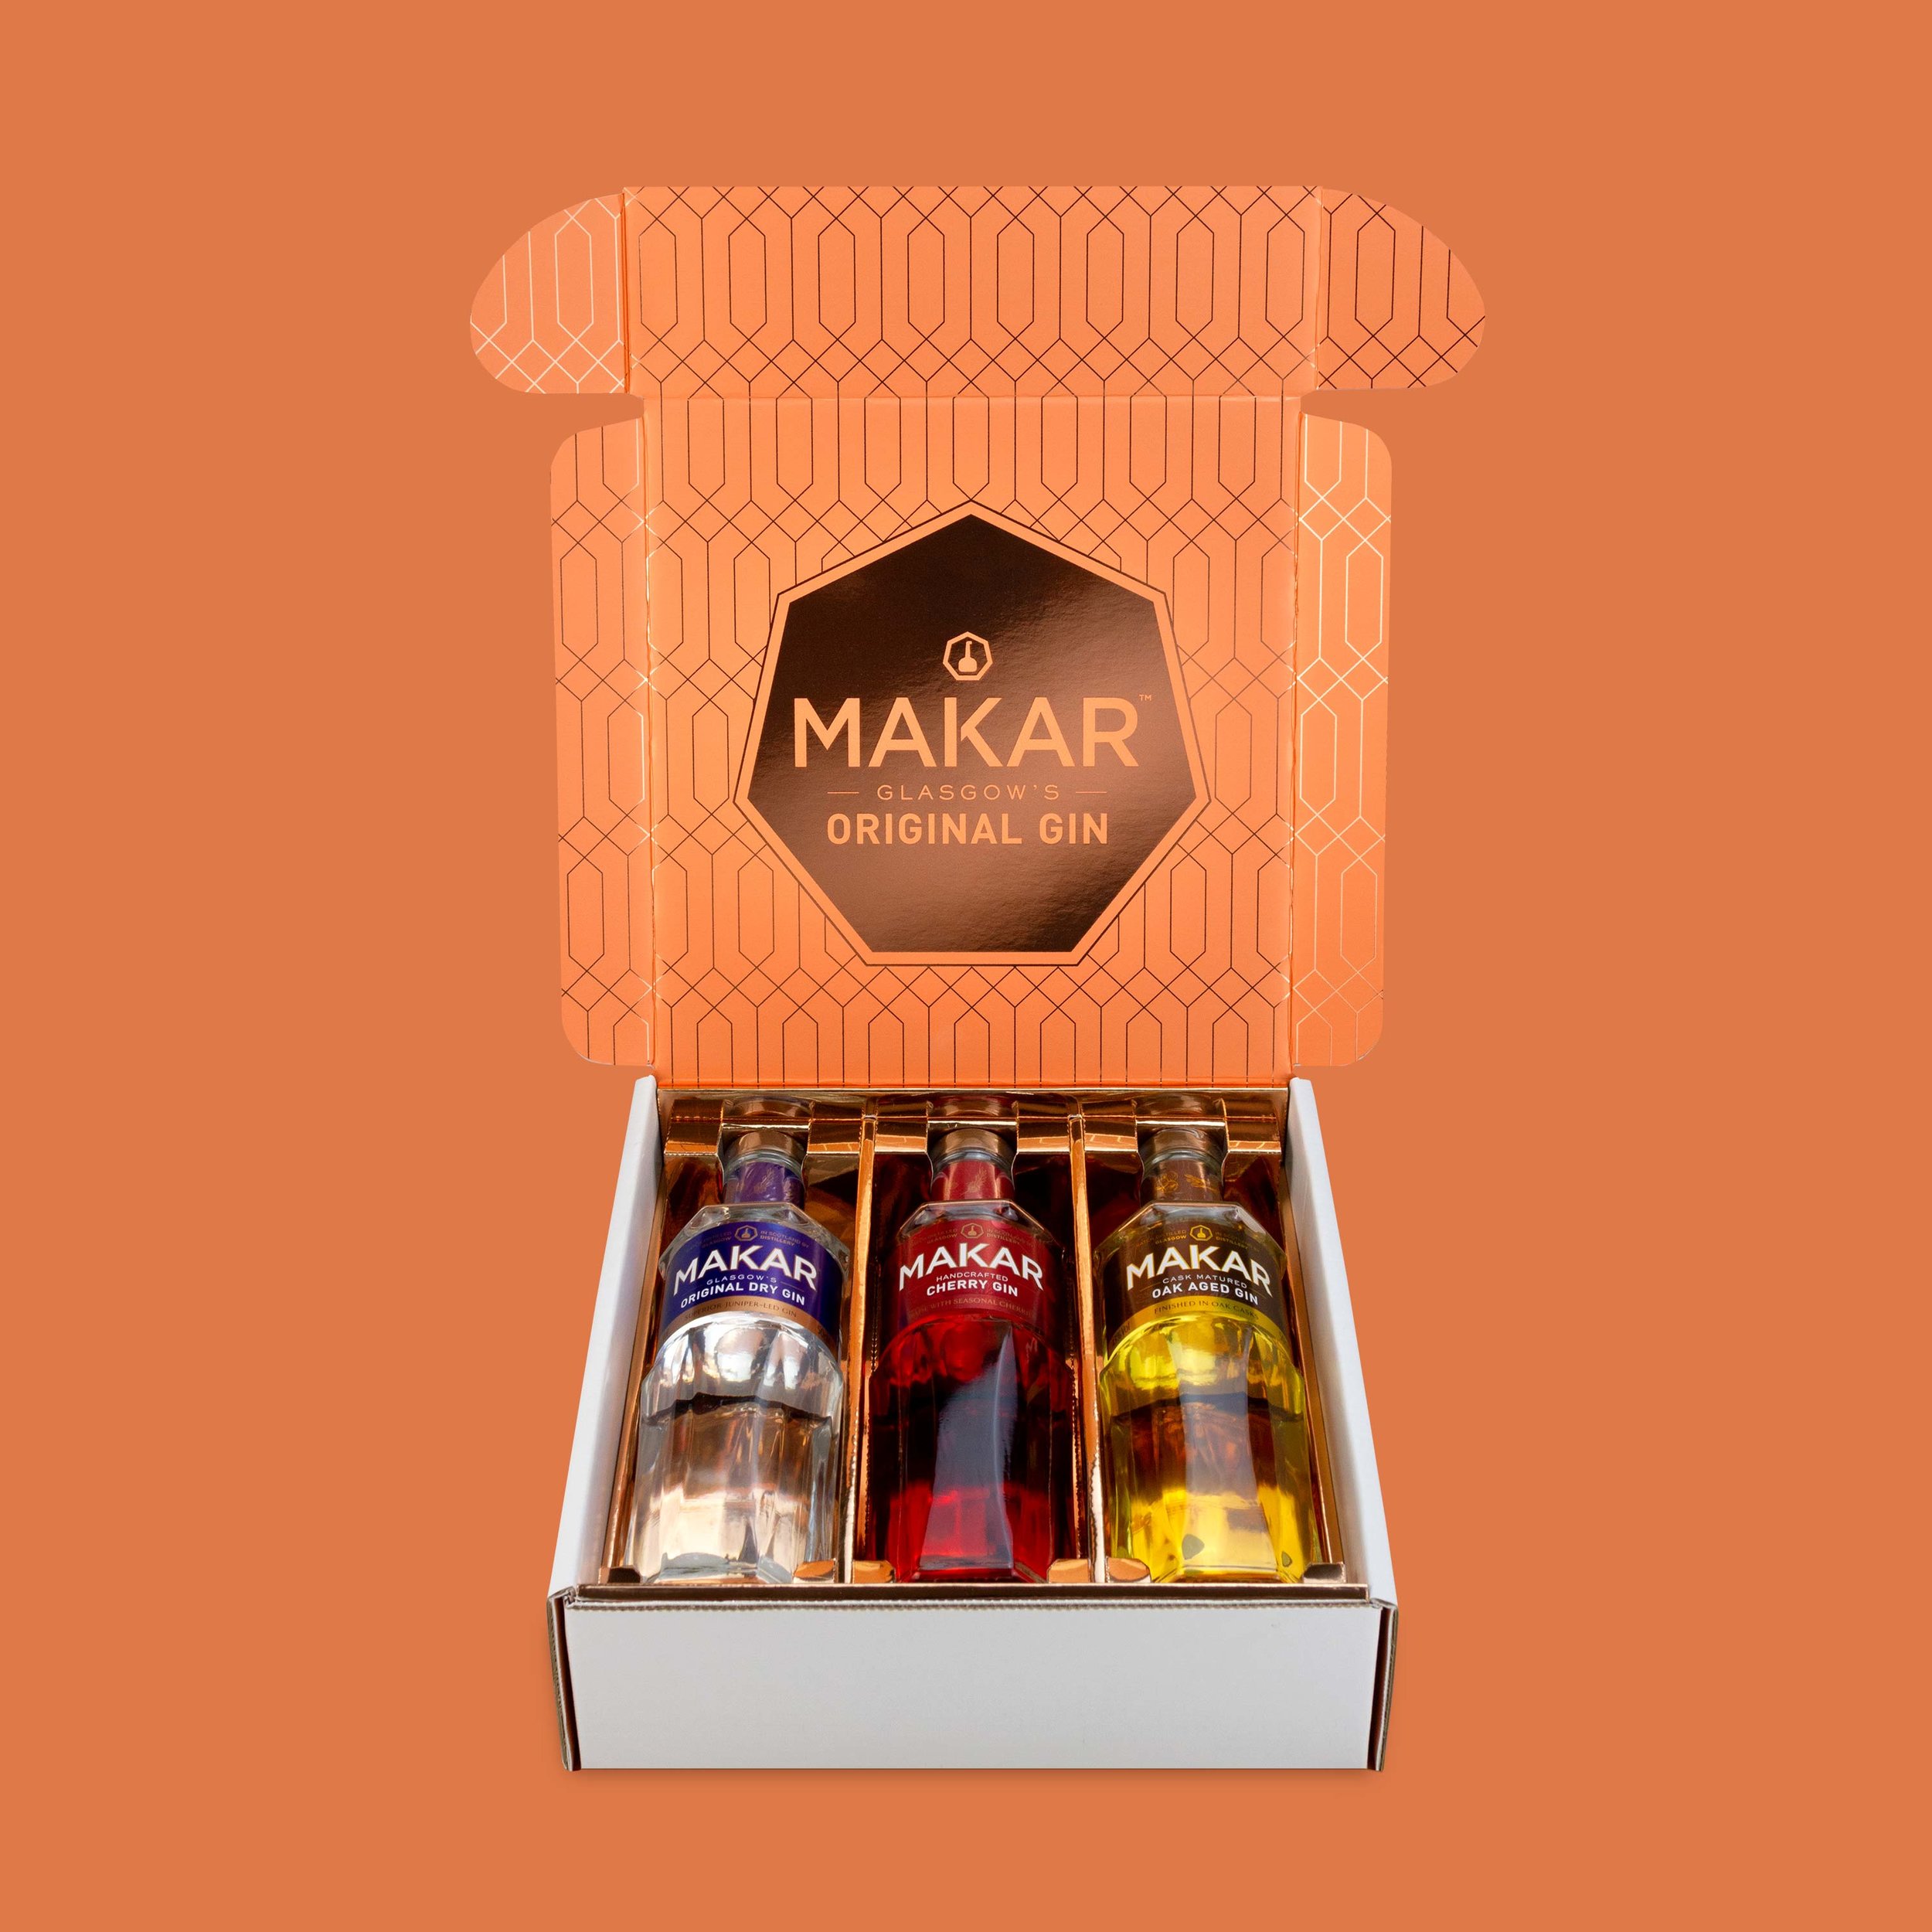 Makar-Gin-Wow-Box-Packaging-Design-Prototype-04.jpg